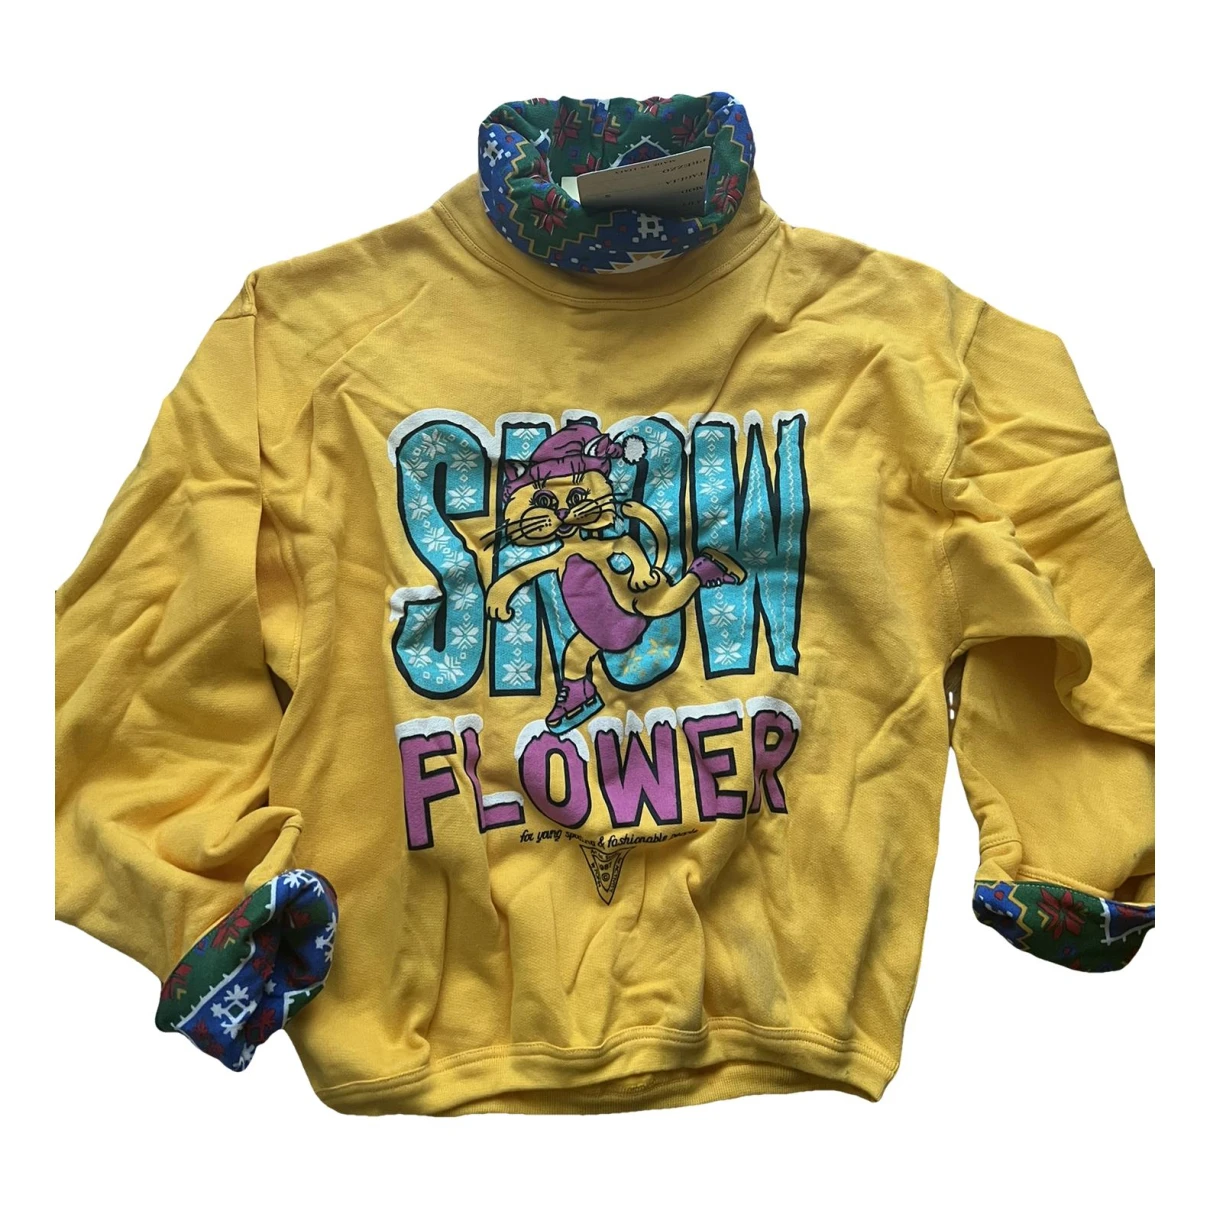 Pre-owned Supreme Sweatshirt In Yellow